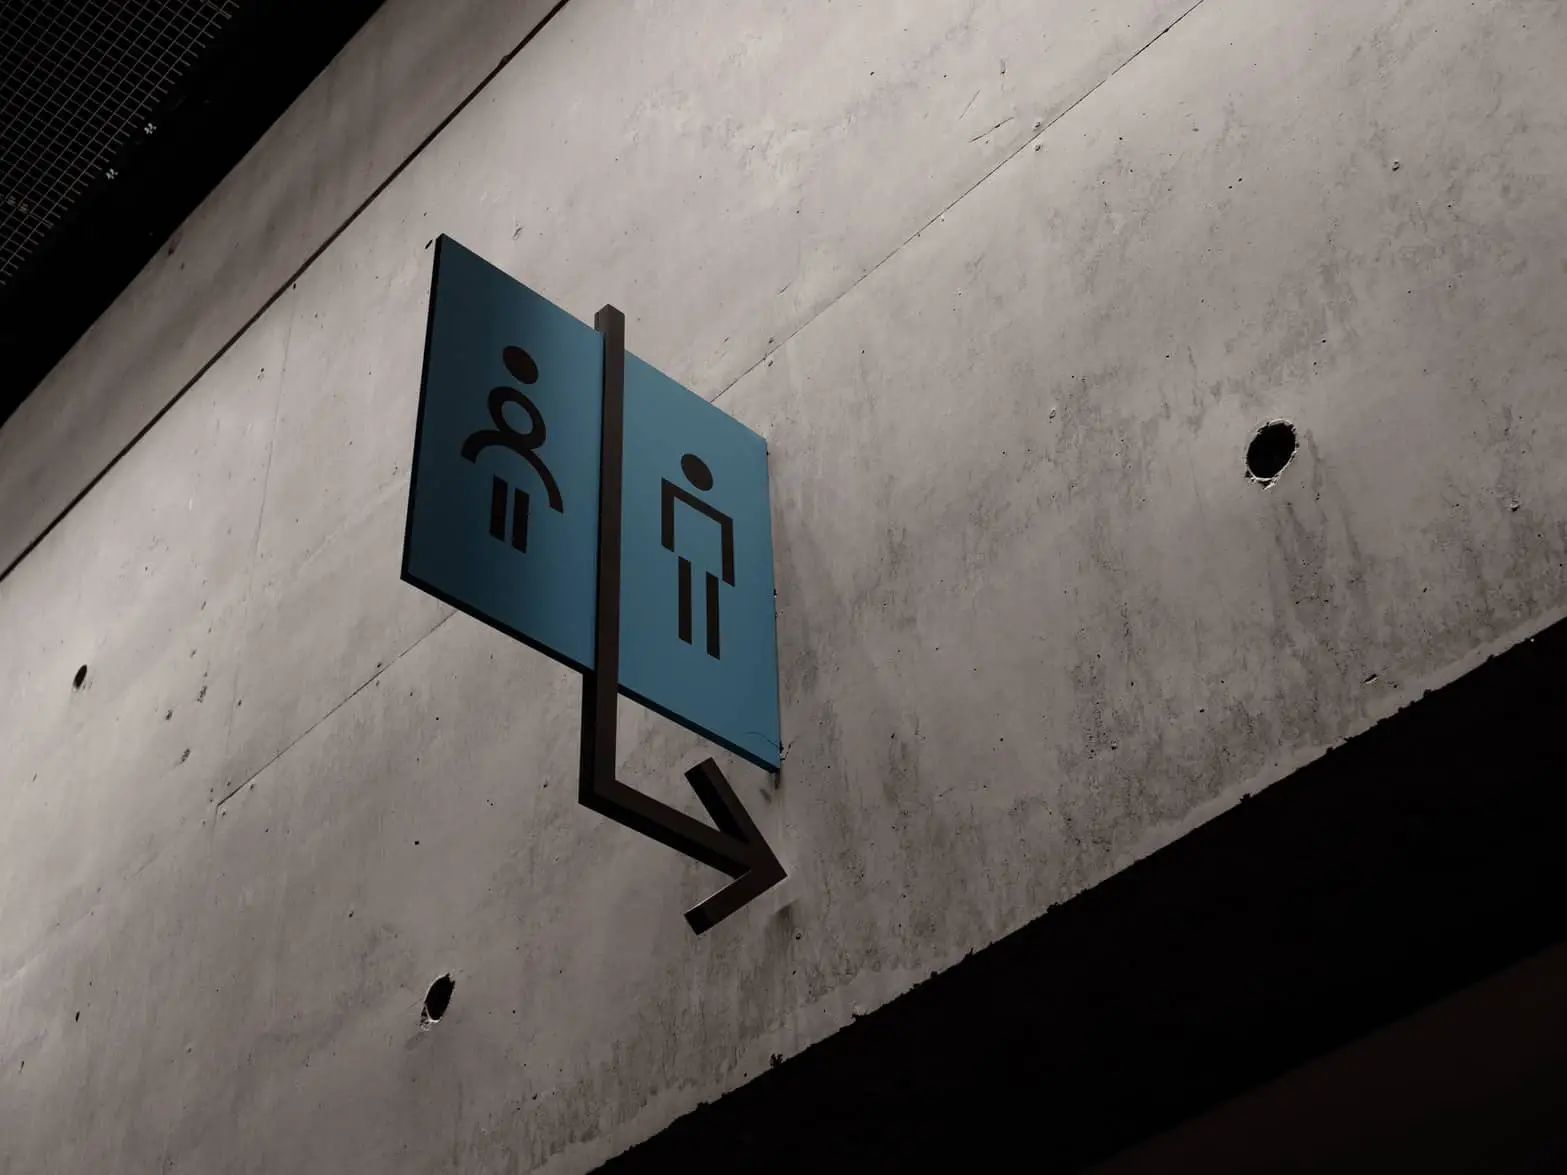 signage for public toilets